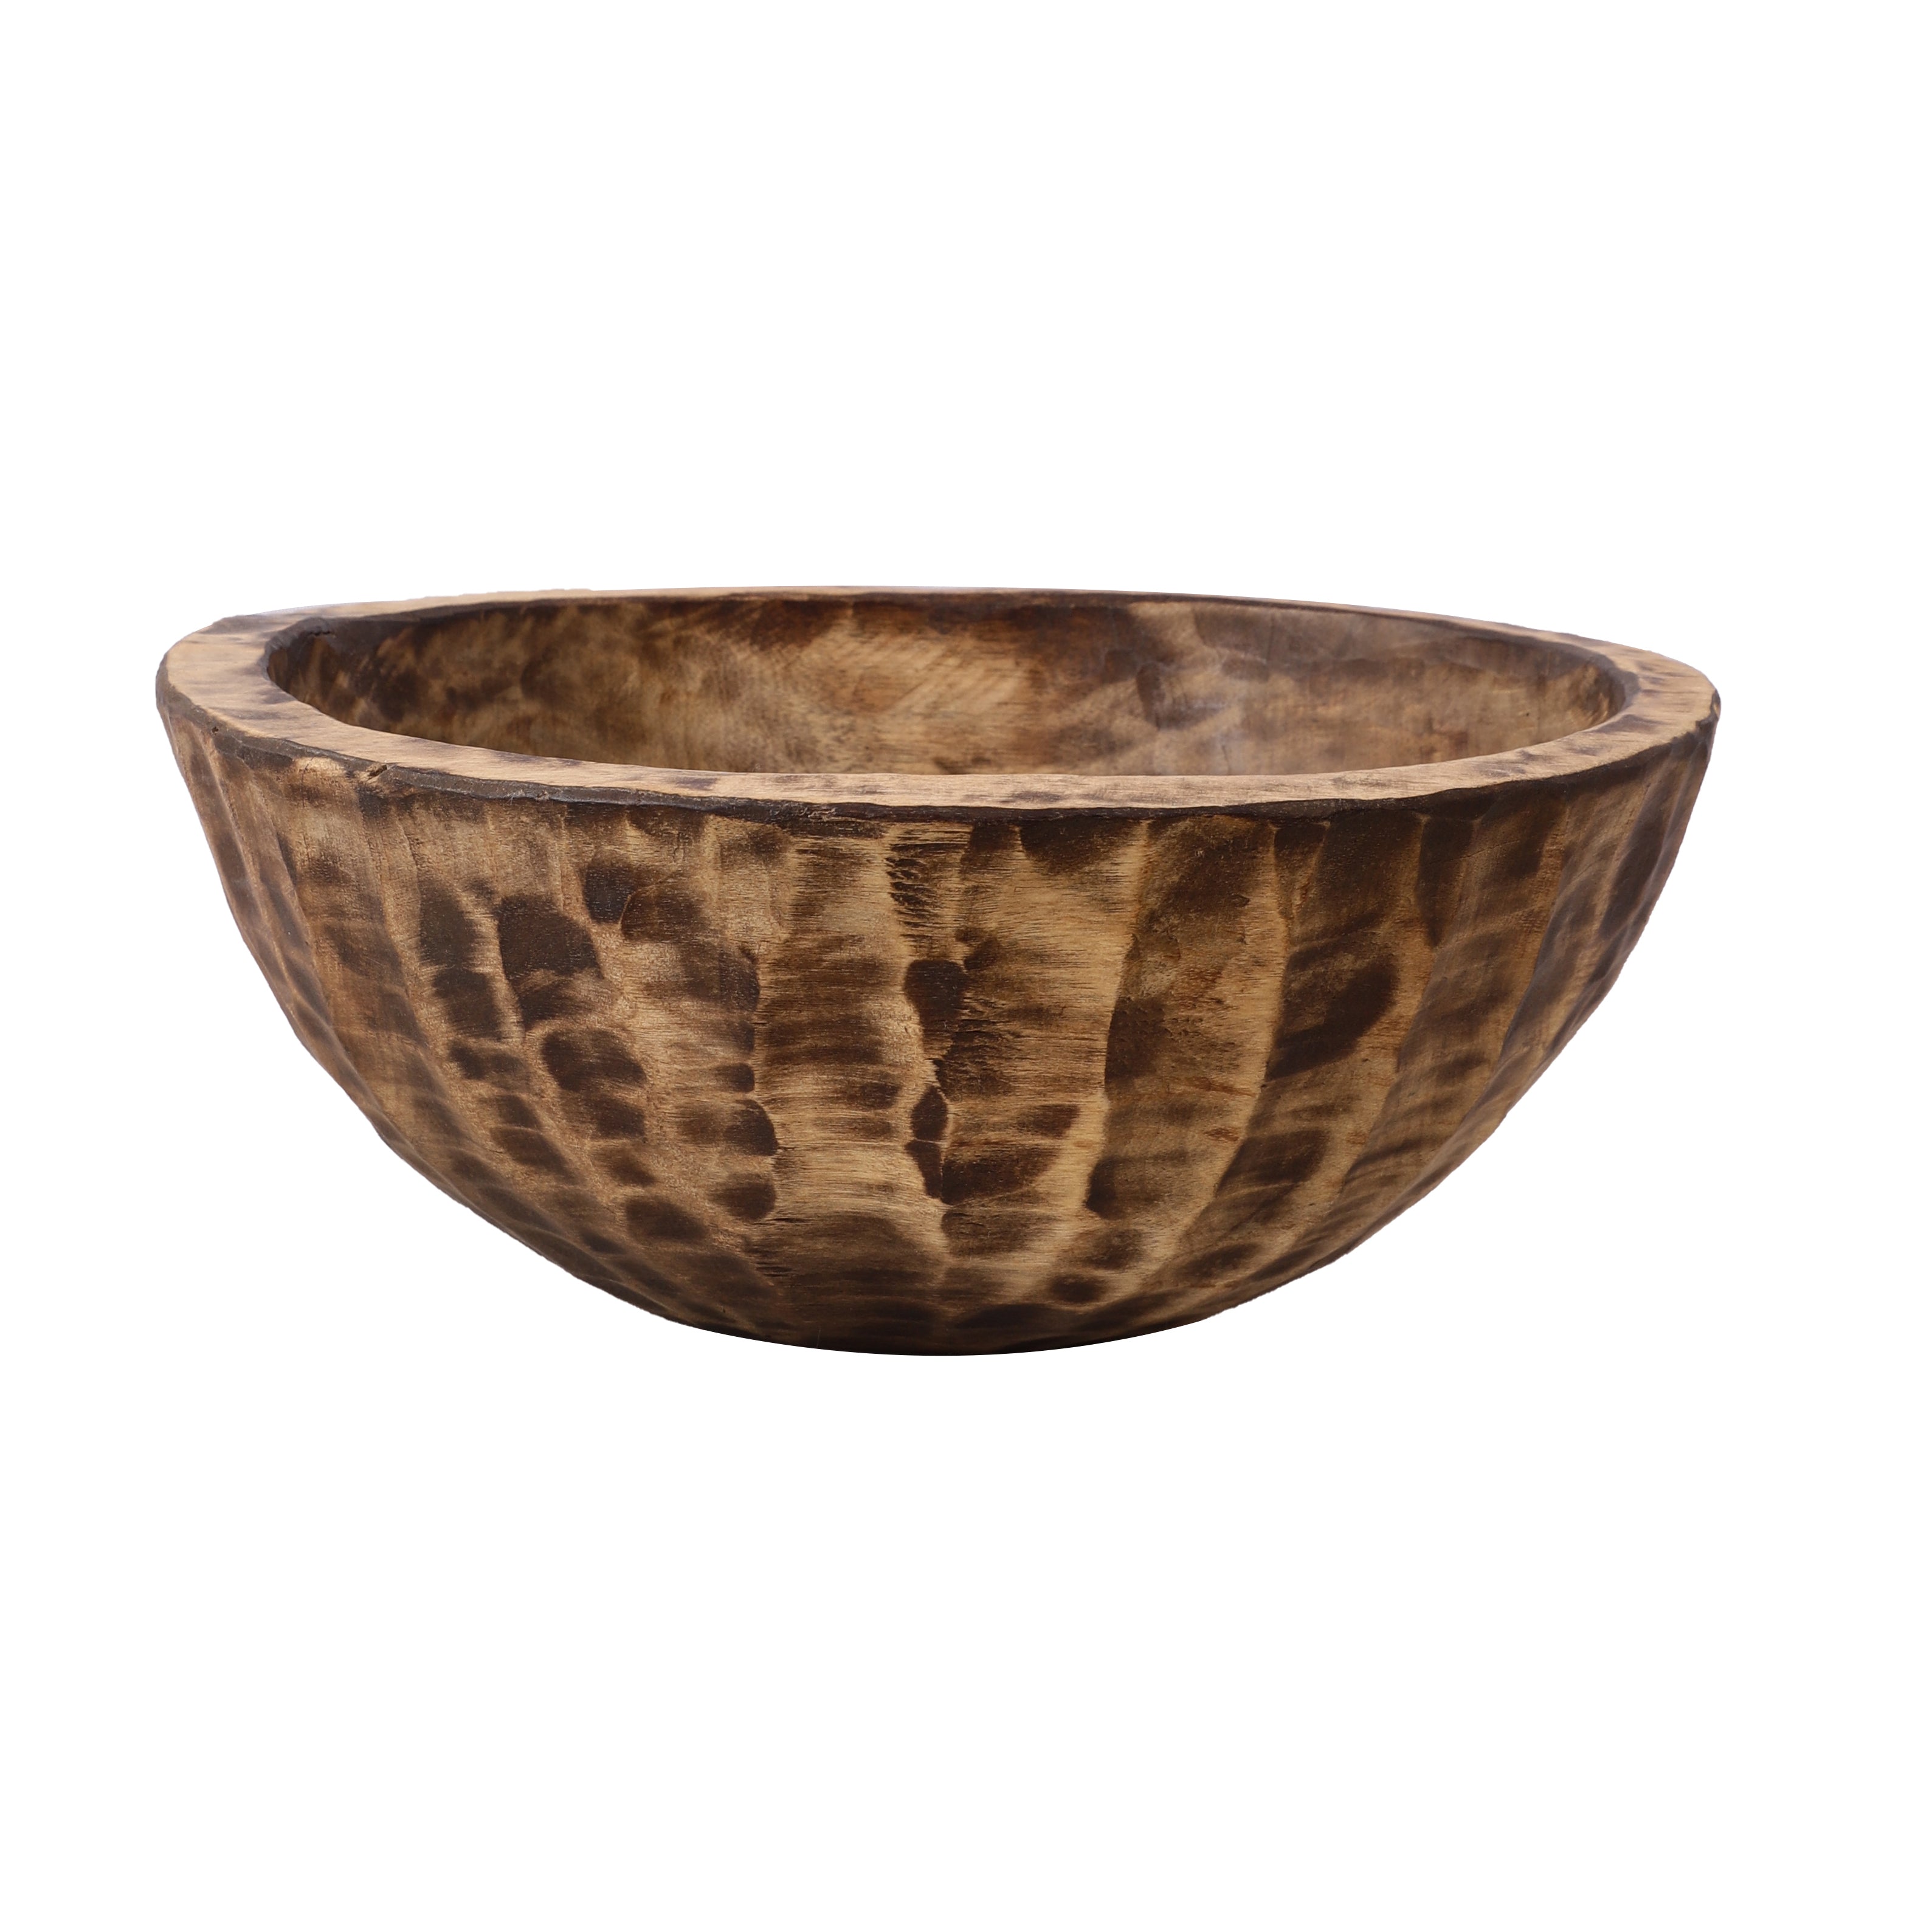 Antique Sculpted Wooden Bowl